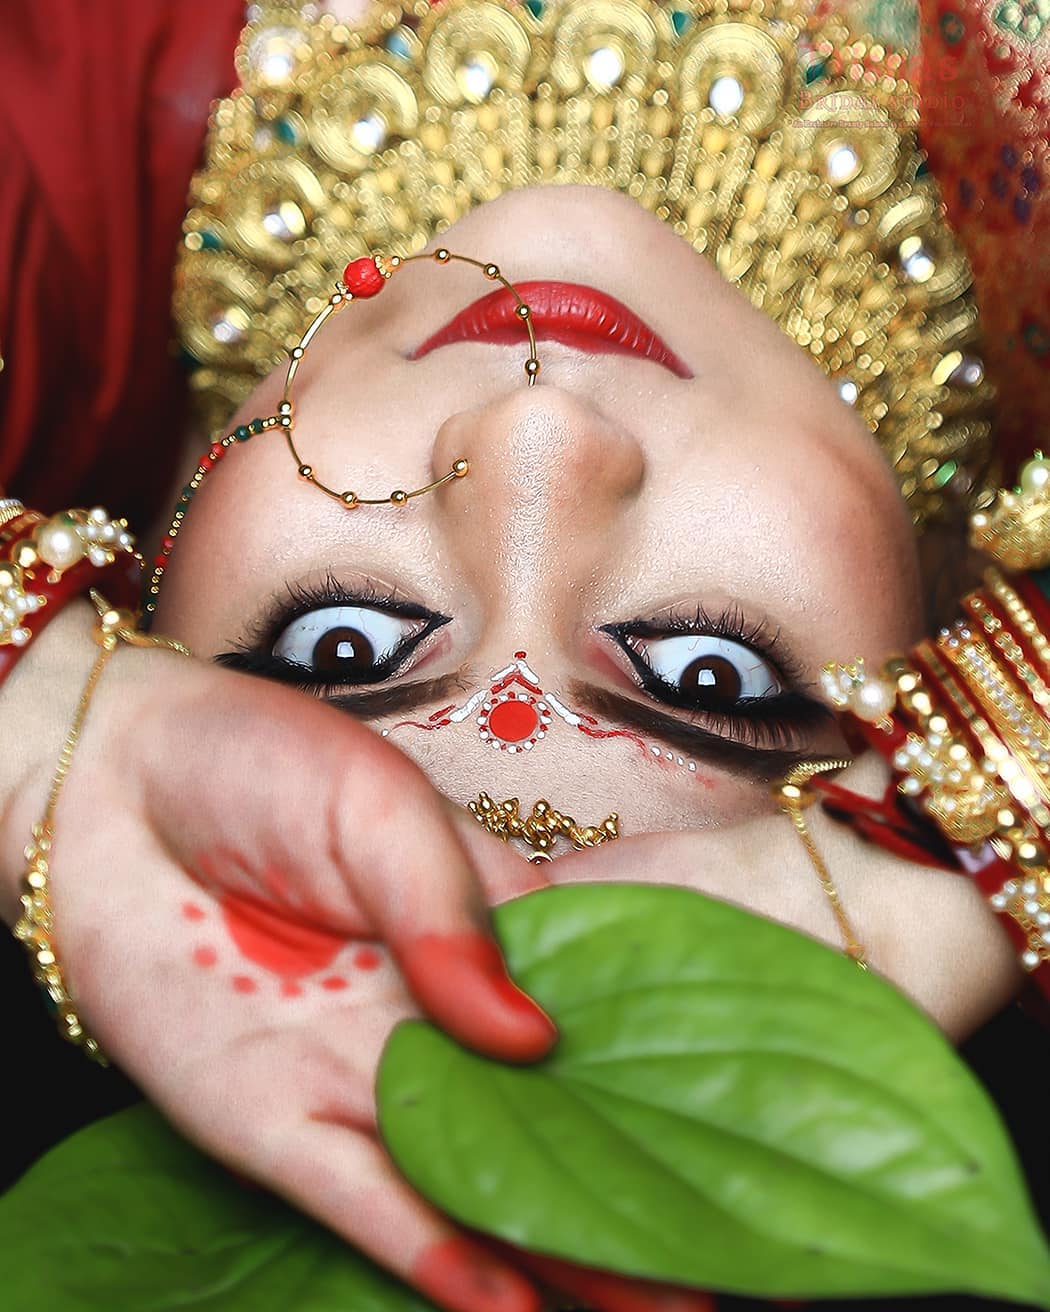 Bengali bride shoot.. MUA : @dishabeautysaloonacademynikol
In frame : Meera
Shoot by : @dip_memento_photography
.
.
#portraits #dslrofficial #indianphotographers 
#portraitsindia #canon #colorsofindia
#photosofindia 
#fashion
#photographersofindia
#portraitsindia #fashionblogger #dipmementophotography
#makeupartist #photography #portraitvision #portraitmood #indianportraits #colorsofindia #portraitphotography #ahmedabad #indianpictures 
#portraitmood #portraits_india #bokehphotography #bongportrait #bokehphotography #yesindia 
@ig_calcutta @all_about_kolkata123
@kolkatasutra
@kolkataportraits 
@kolkataportraitphotographer
@stories_from_lens 
@kolkatas_paparazzi
@globe_portraits
@ig_biswajit 
@portvisual
@bong_crush_ 
@bong.divas 
@_bong.queen_
@bong_fashion_bloggers
@bong_princess
@bong_angles
@beauty_of_bengal
@bong_bomb
@bongoporichoy
@indian_fashion_bloggers
#bongportrait #bongcrush_official
@bestportraitsindia